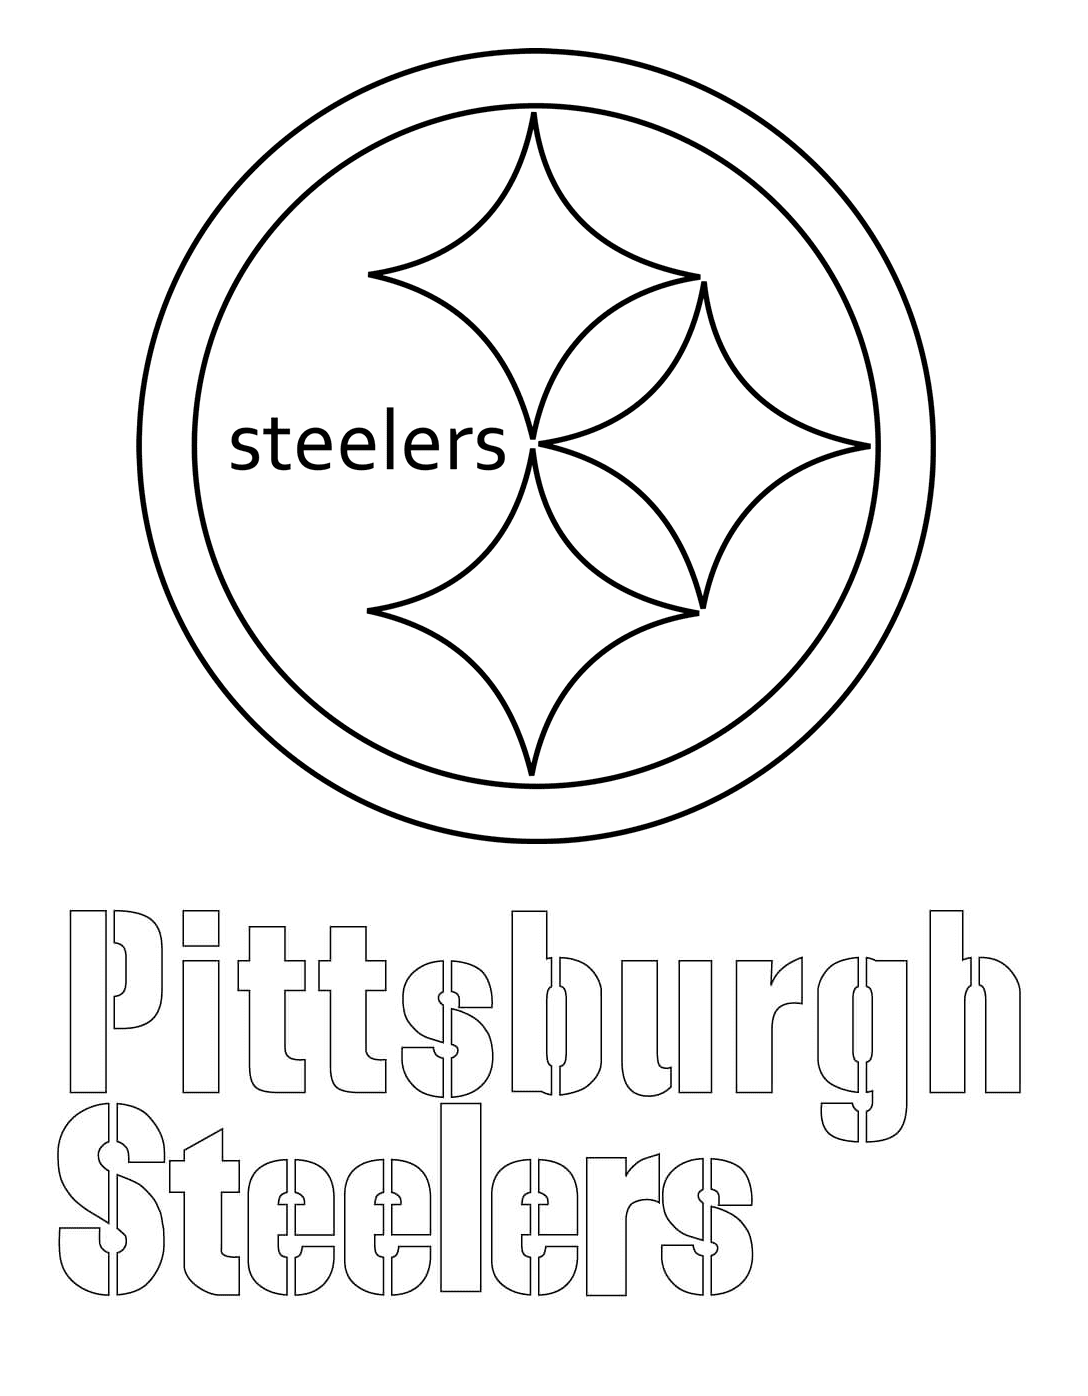 Logotipo do Pittsburgh Steelers da NFL